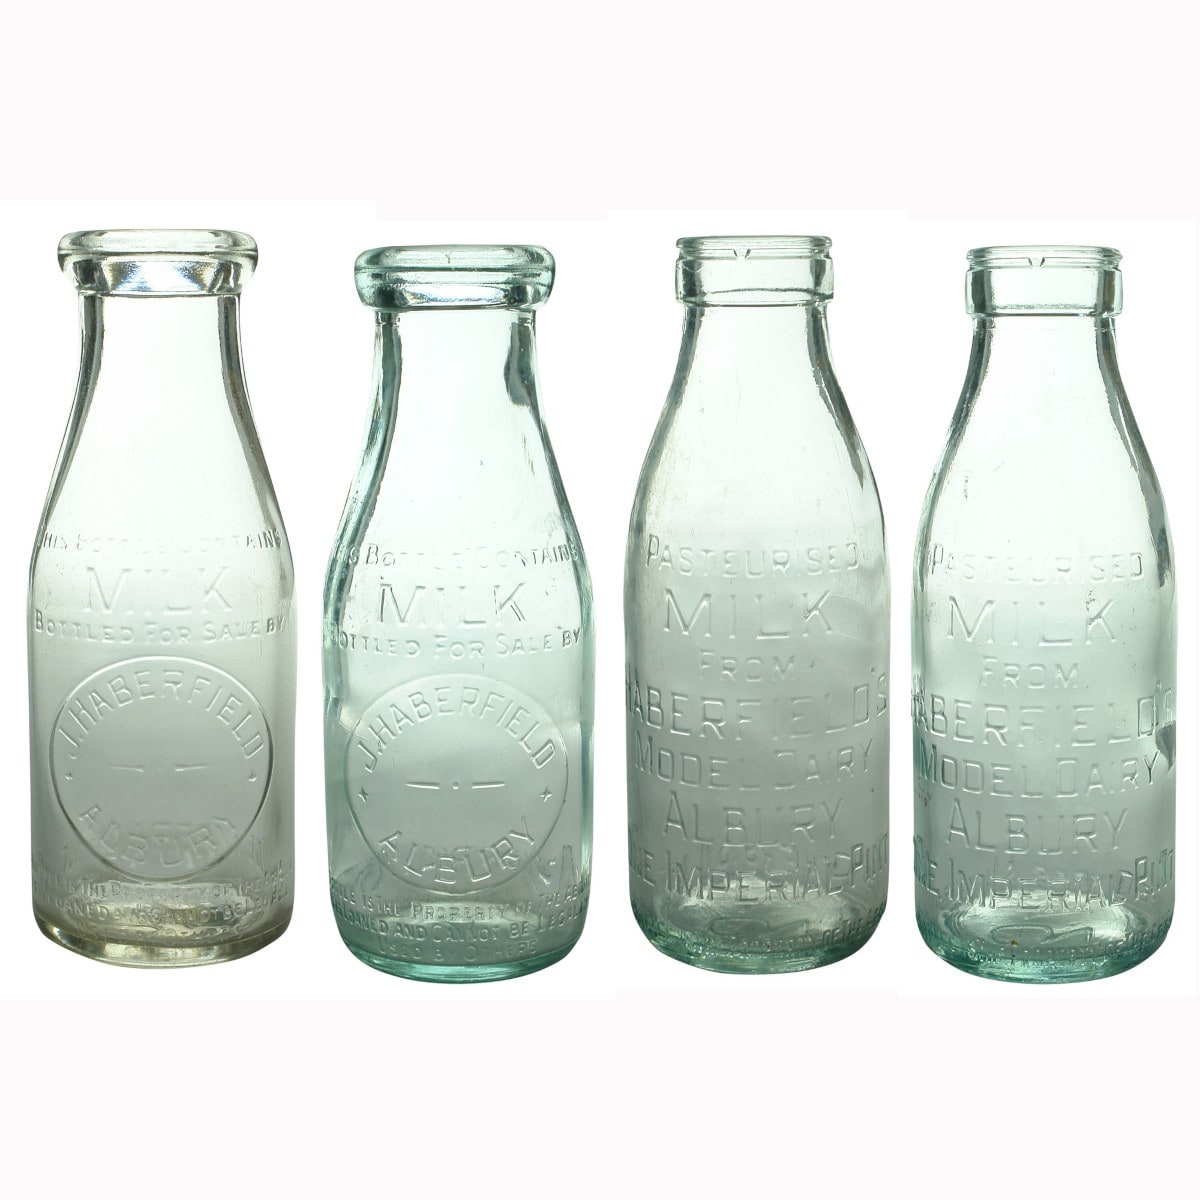 Four Haberfield's Pint Milk Bottles from Albury.